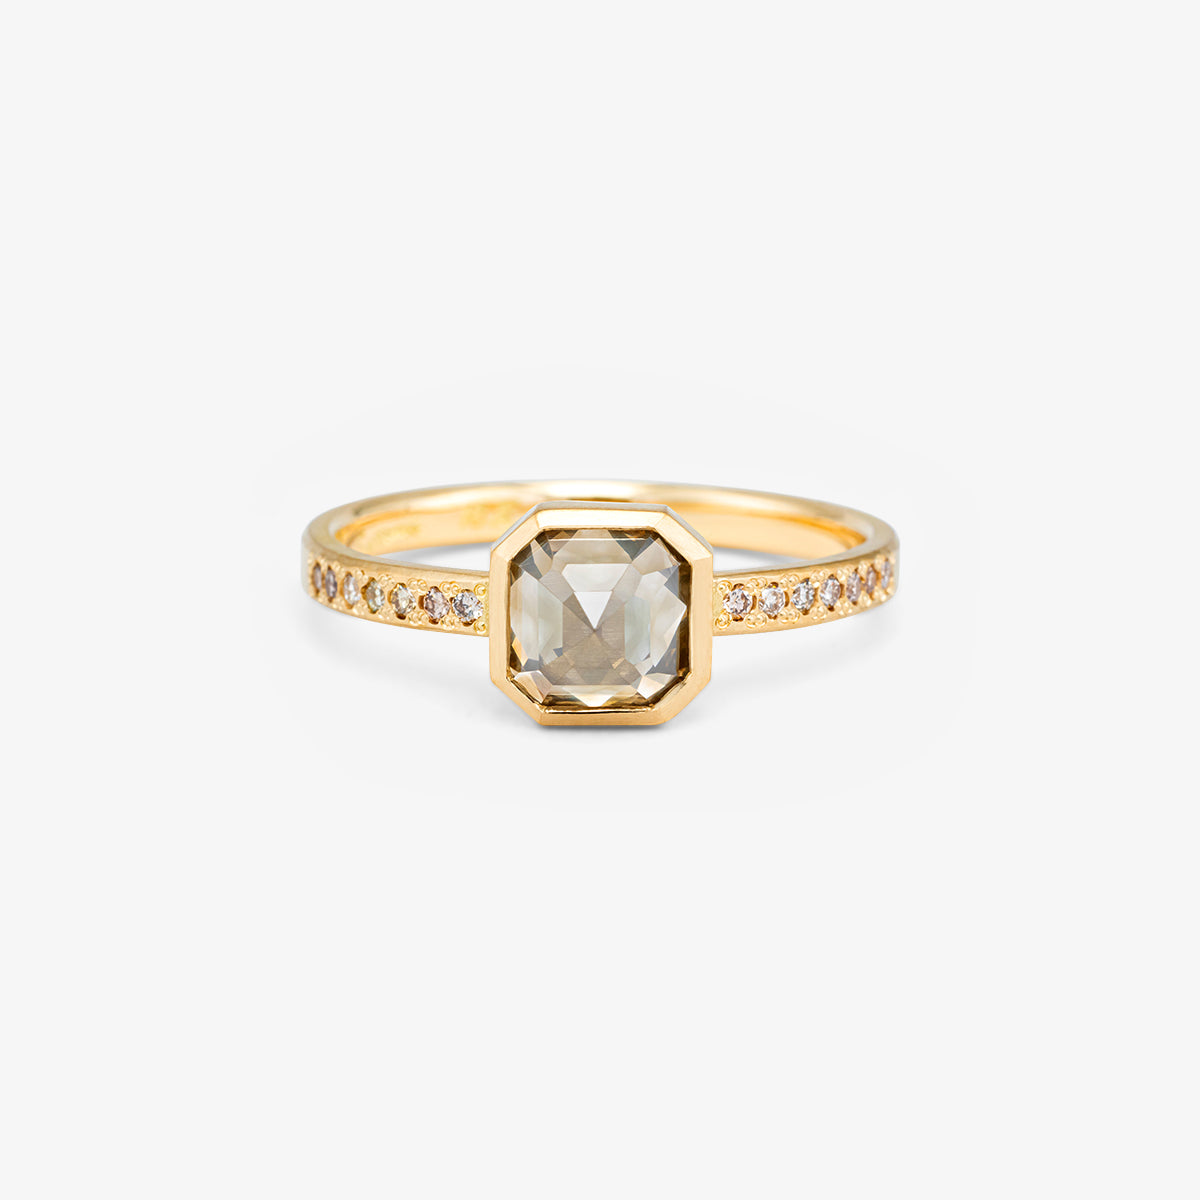 1.0 Carat One-of-a-Kind Mogul Cut Diamond Ring